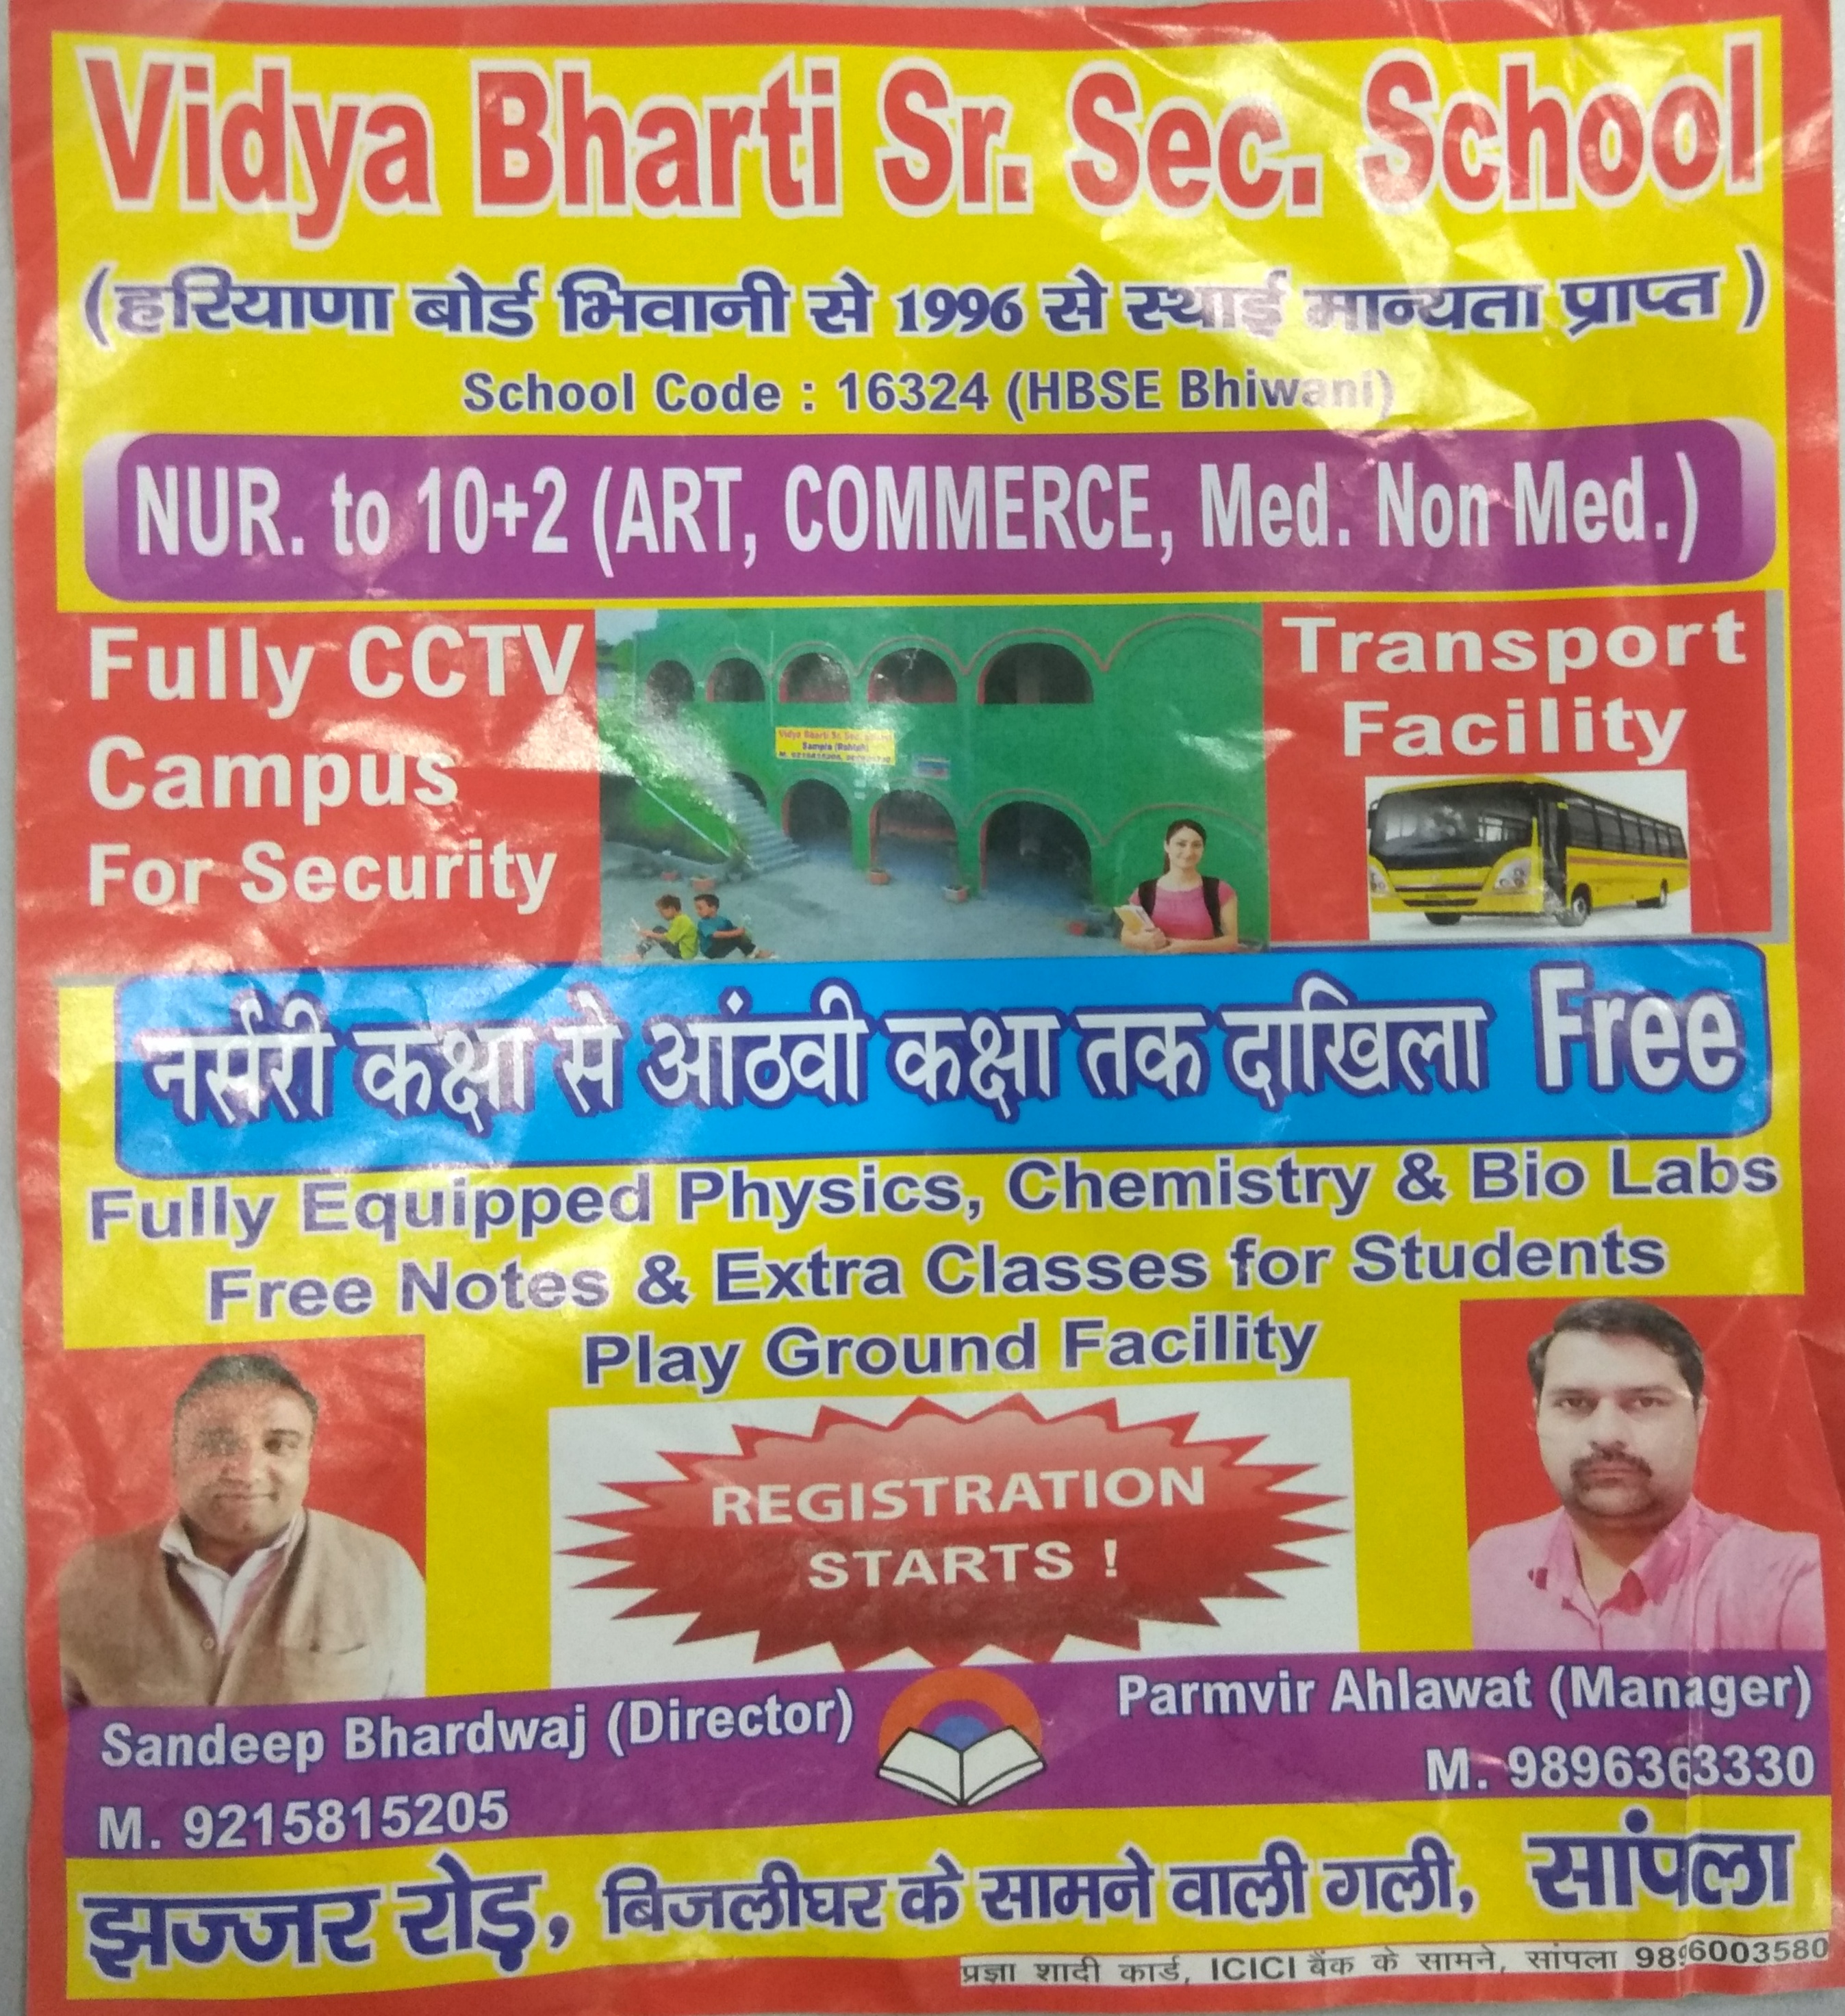 Vidya Bharti Sr. Sec. School Education | Schools